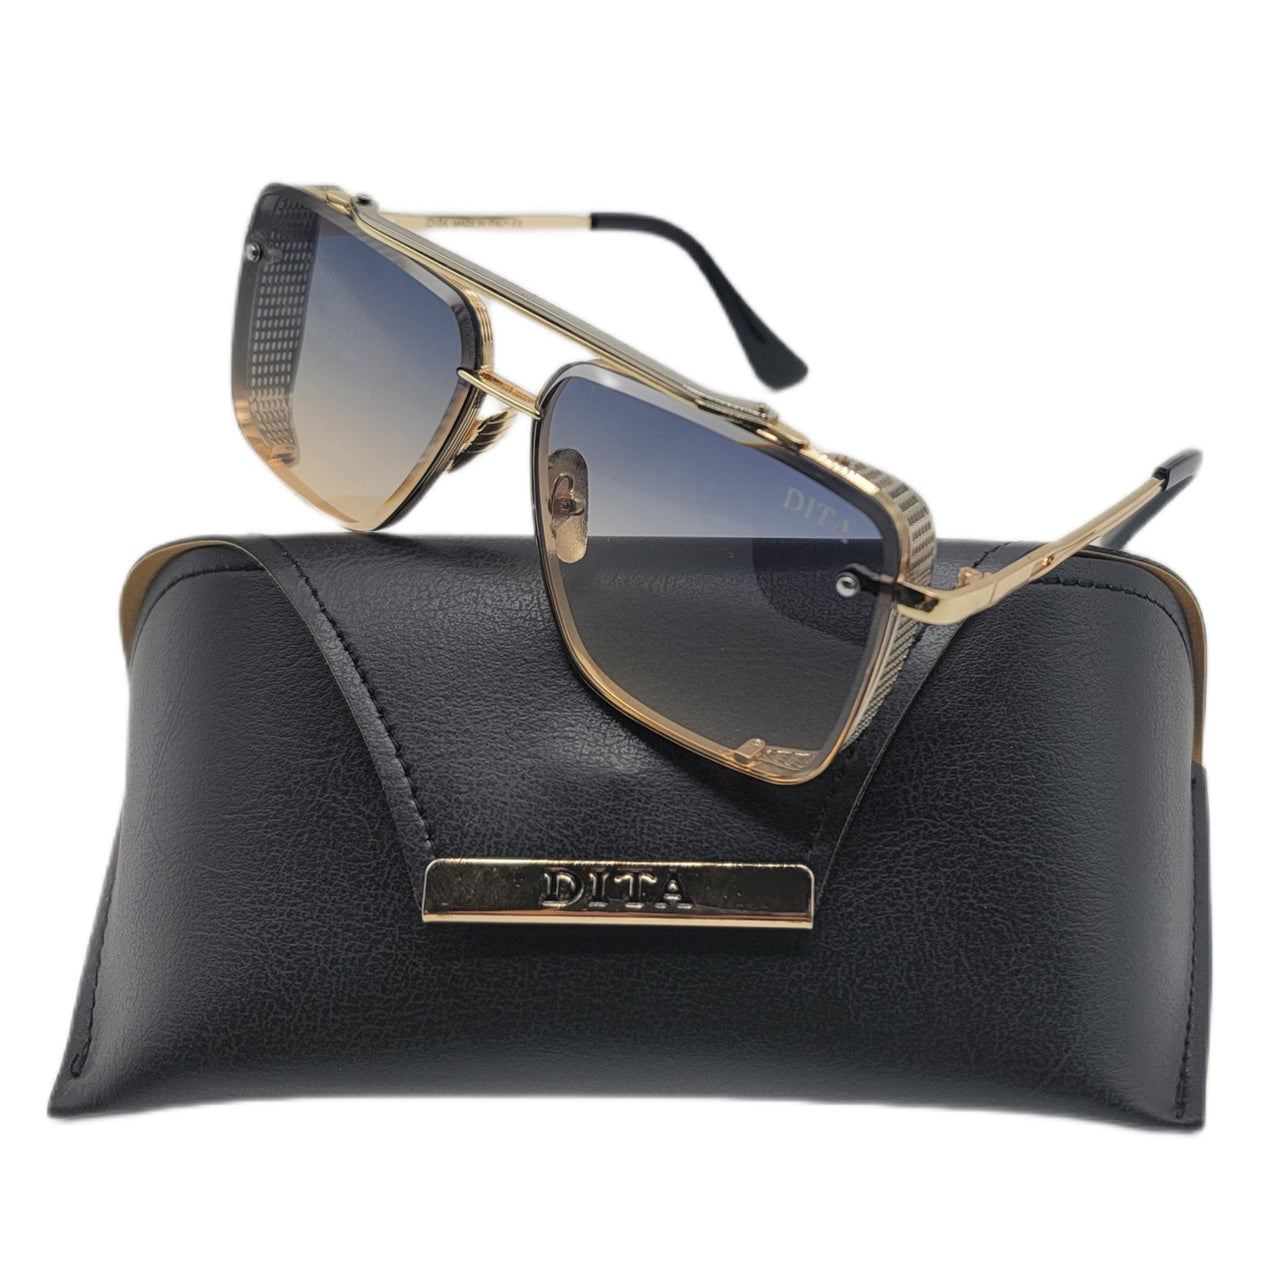 The Bag Couture Sunglasses DITA MACH 6 Sunglasses GBR